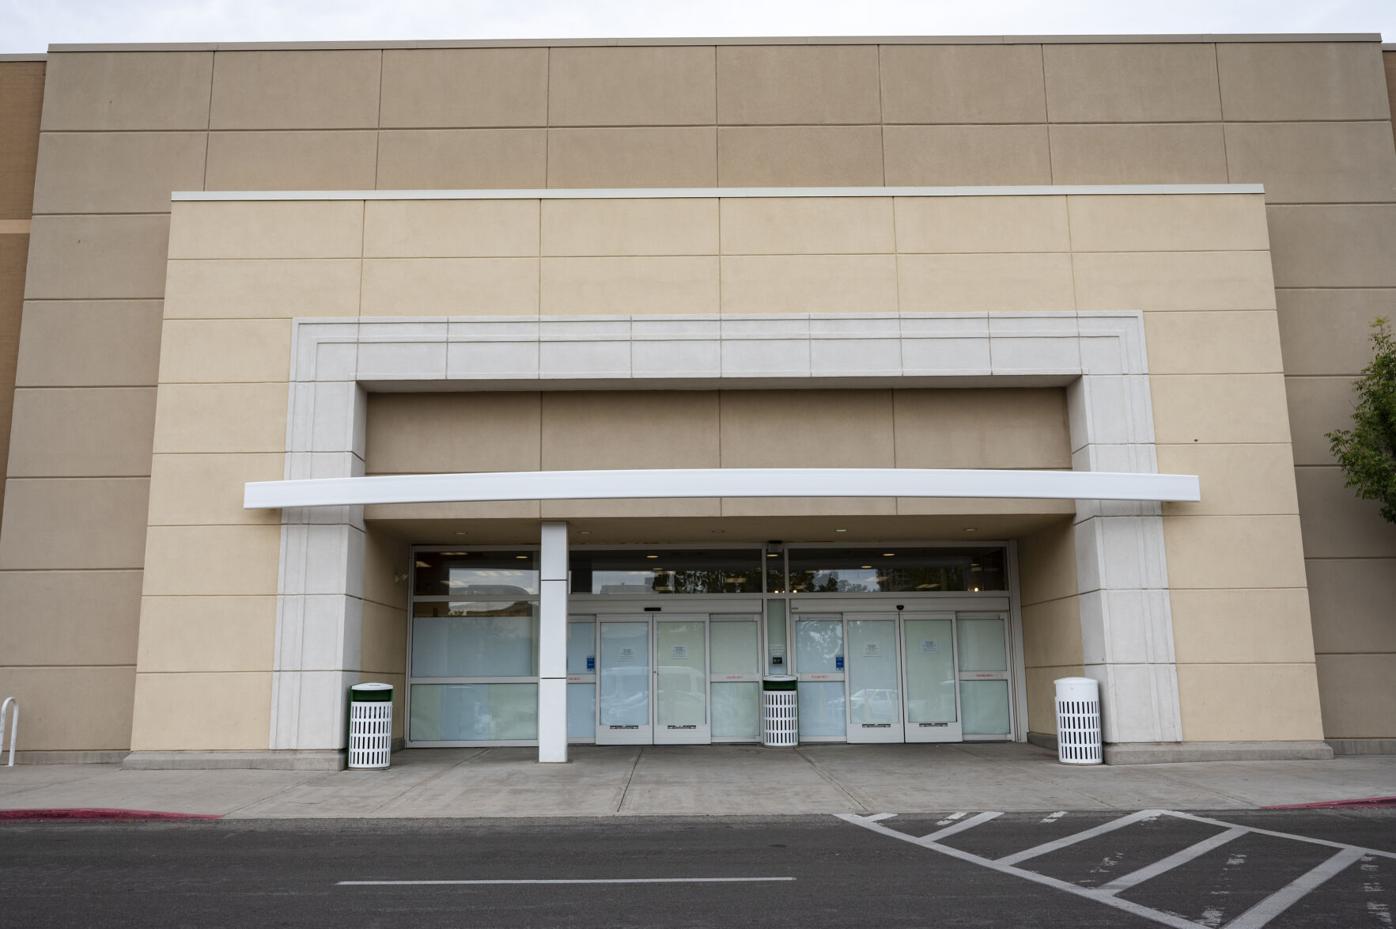 Closure of Coronado Center Kohl's leaves customers confused, Business